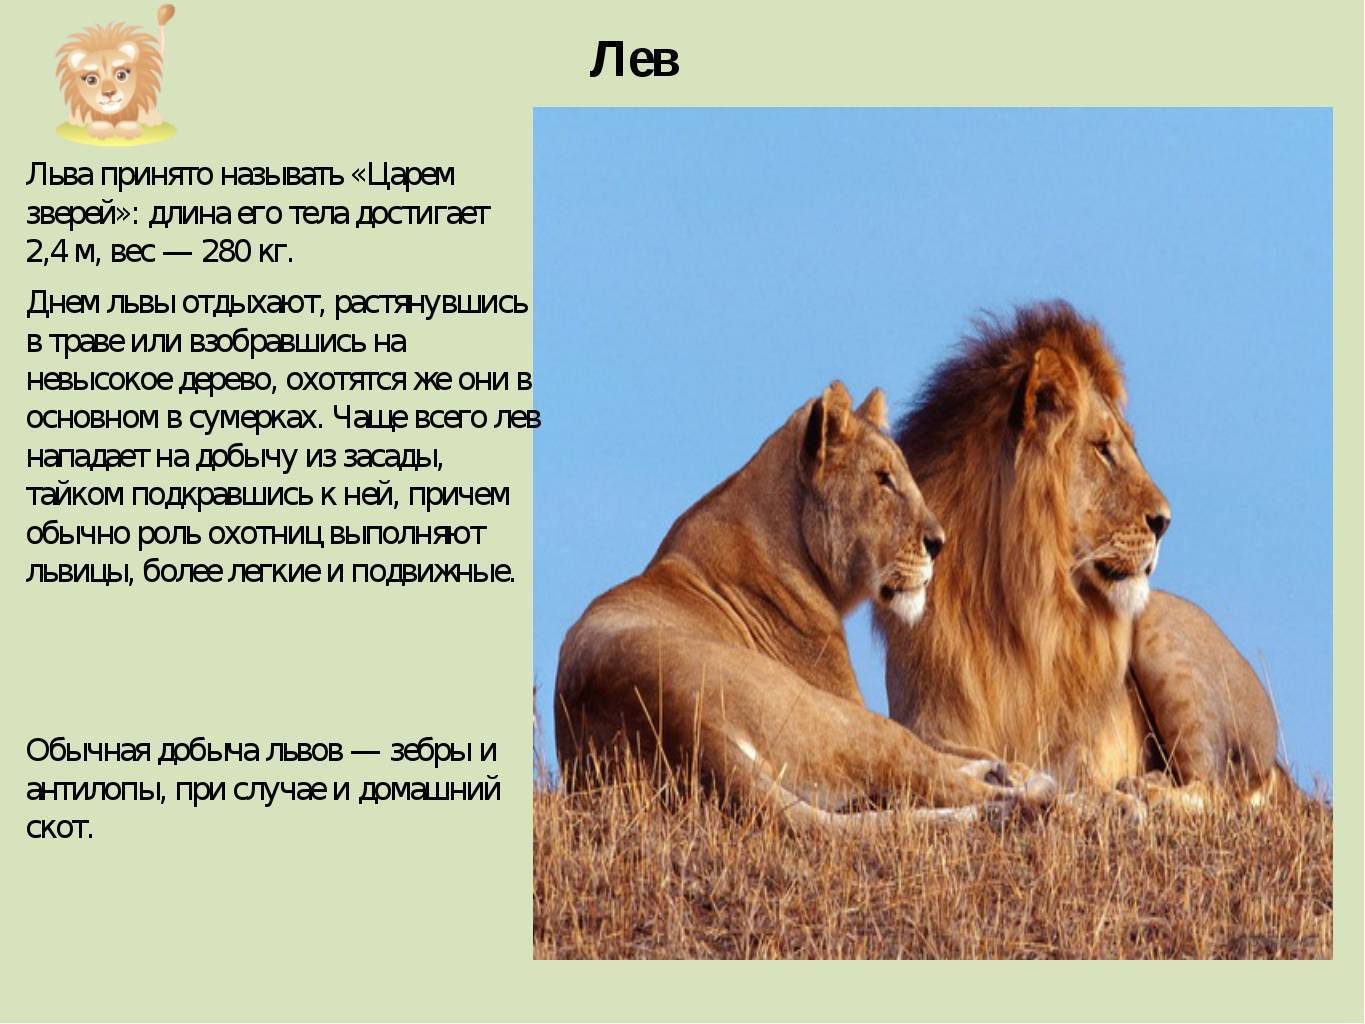 Описание Льва